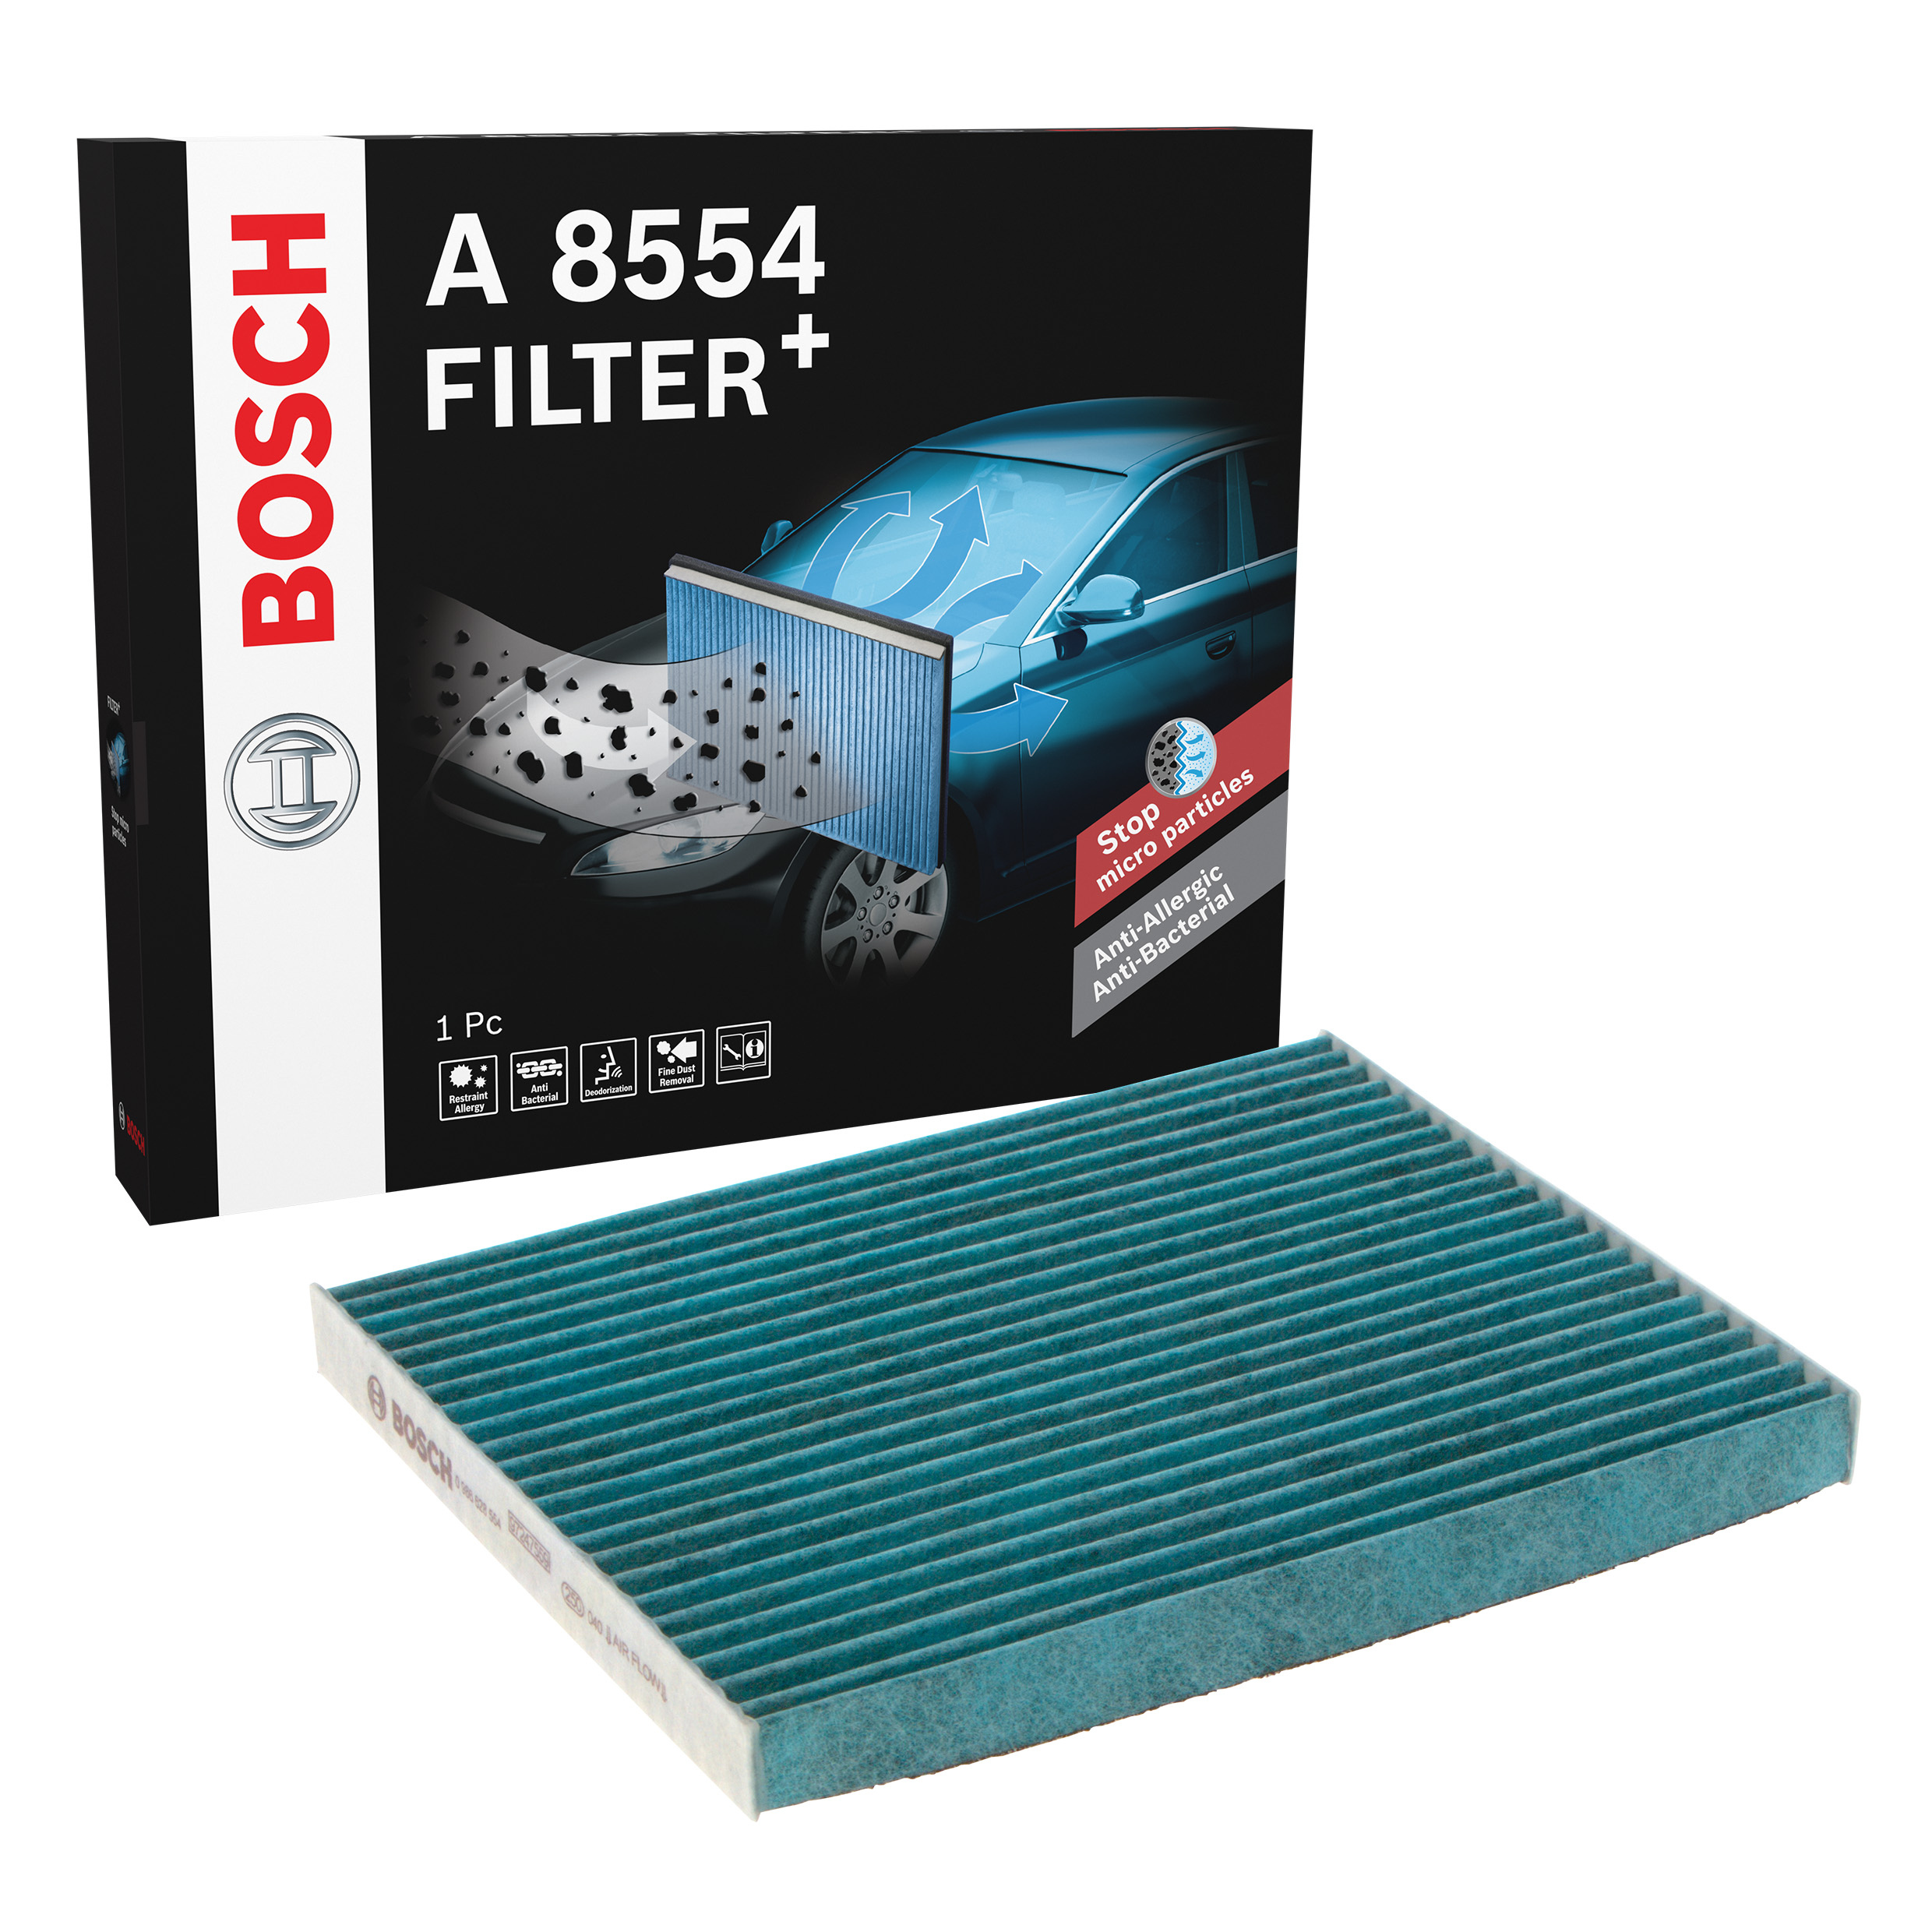 Filter, interior air FILTER+ A8554 Bosch